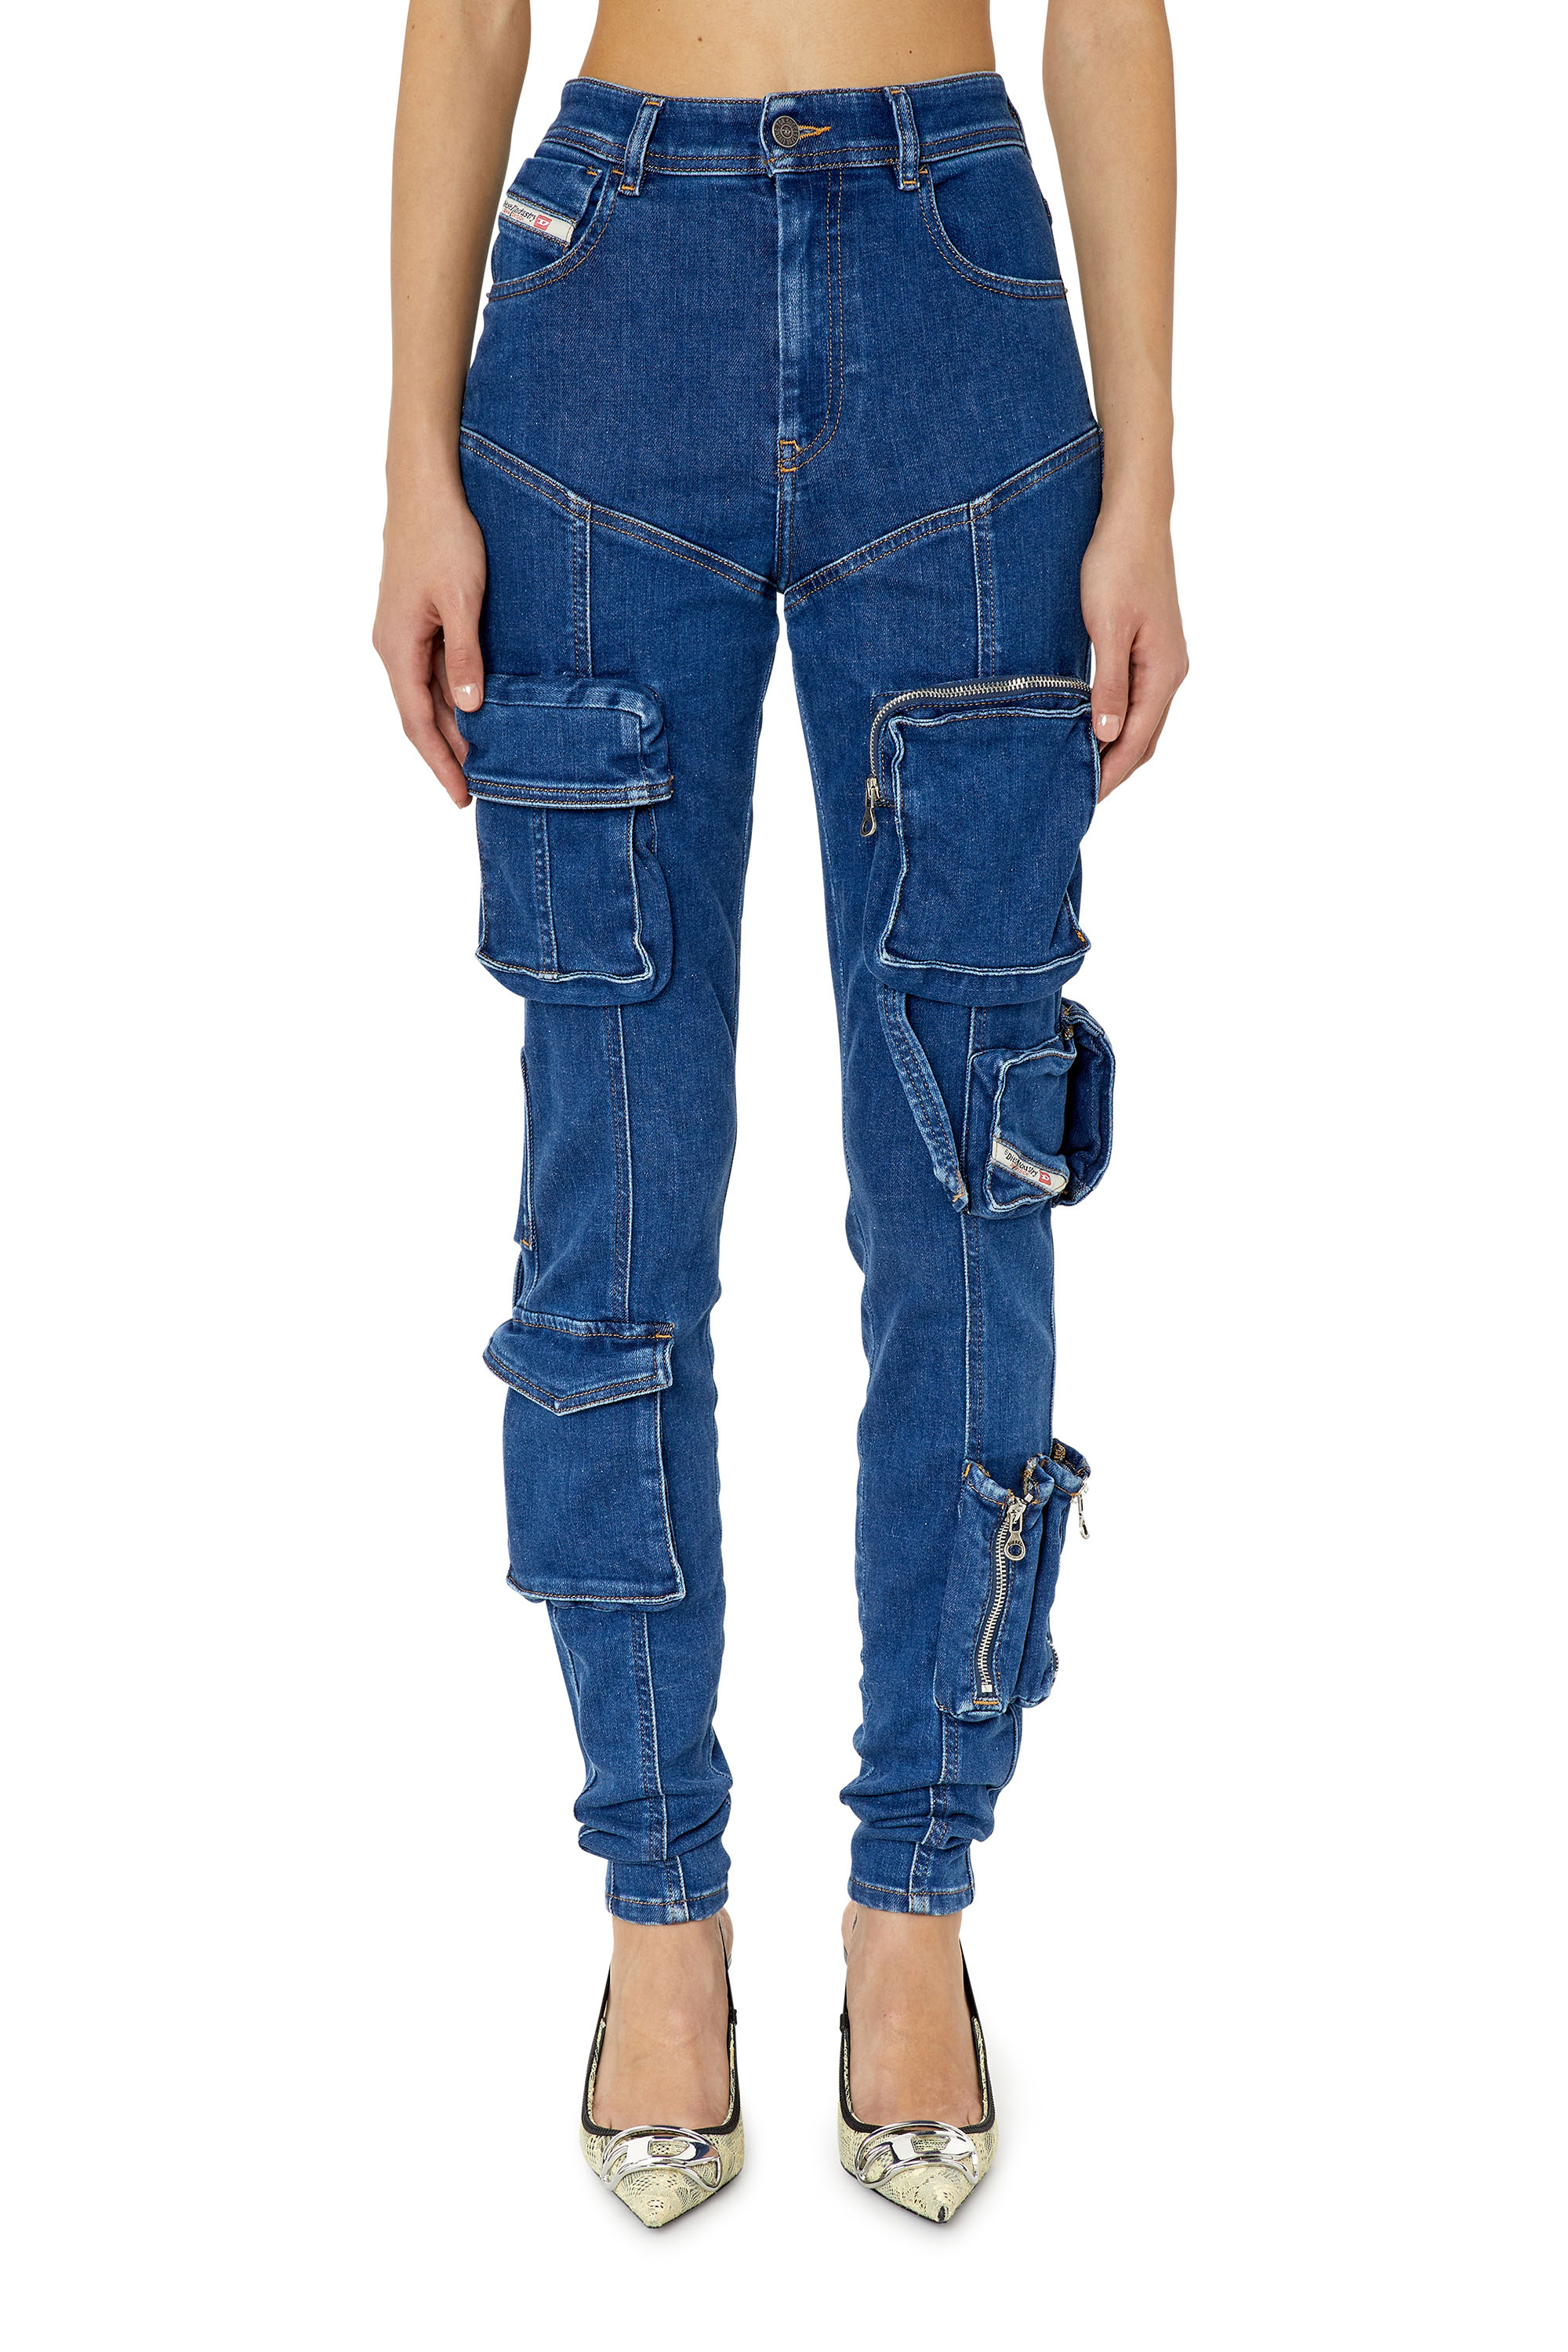 Women's Super Skinny Jeans | Shop on Diesel.com